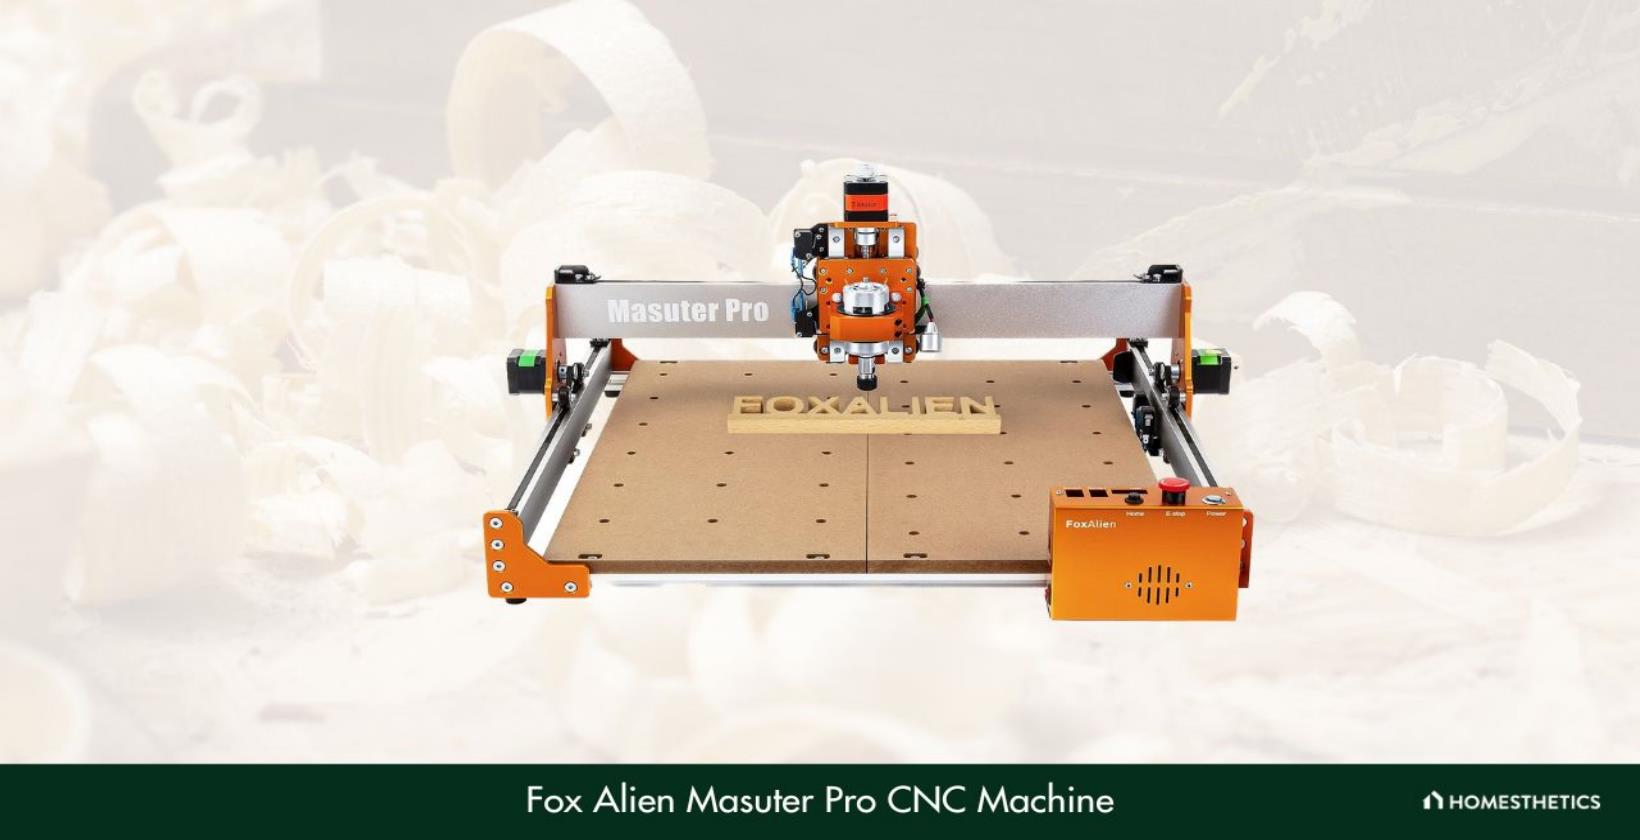 5. Fox Alien Masuter Pro CNC Machine